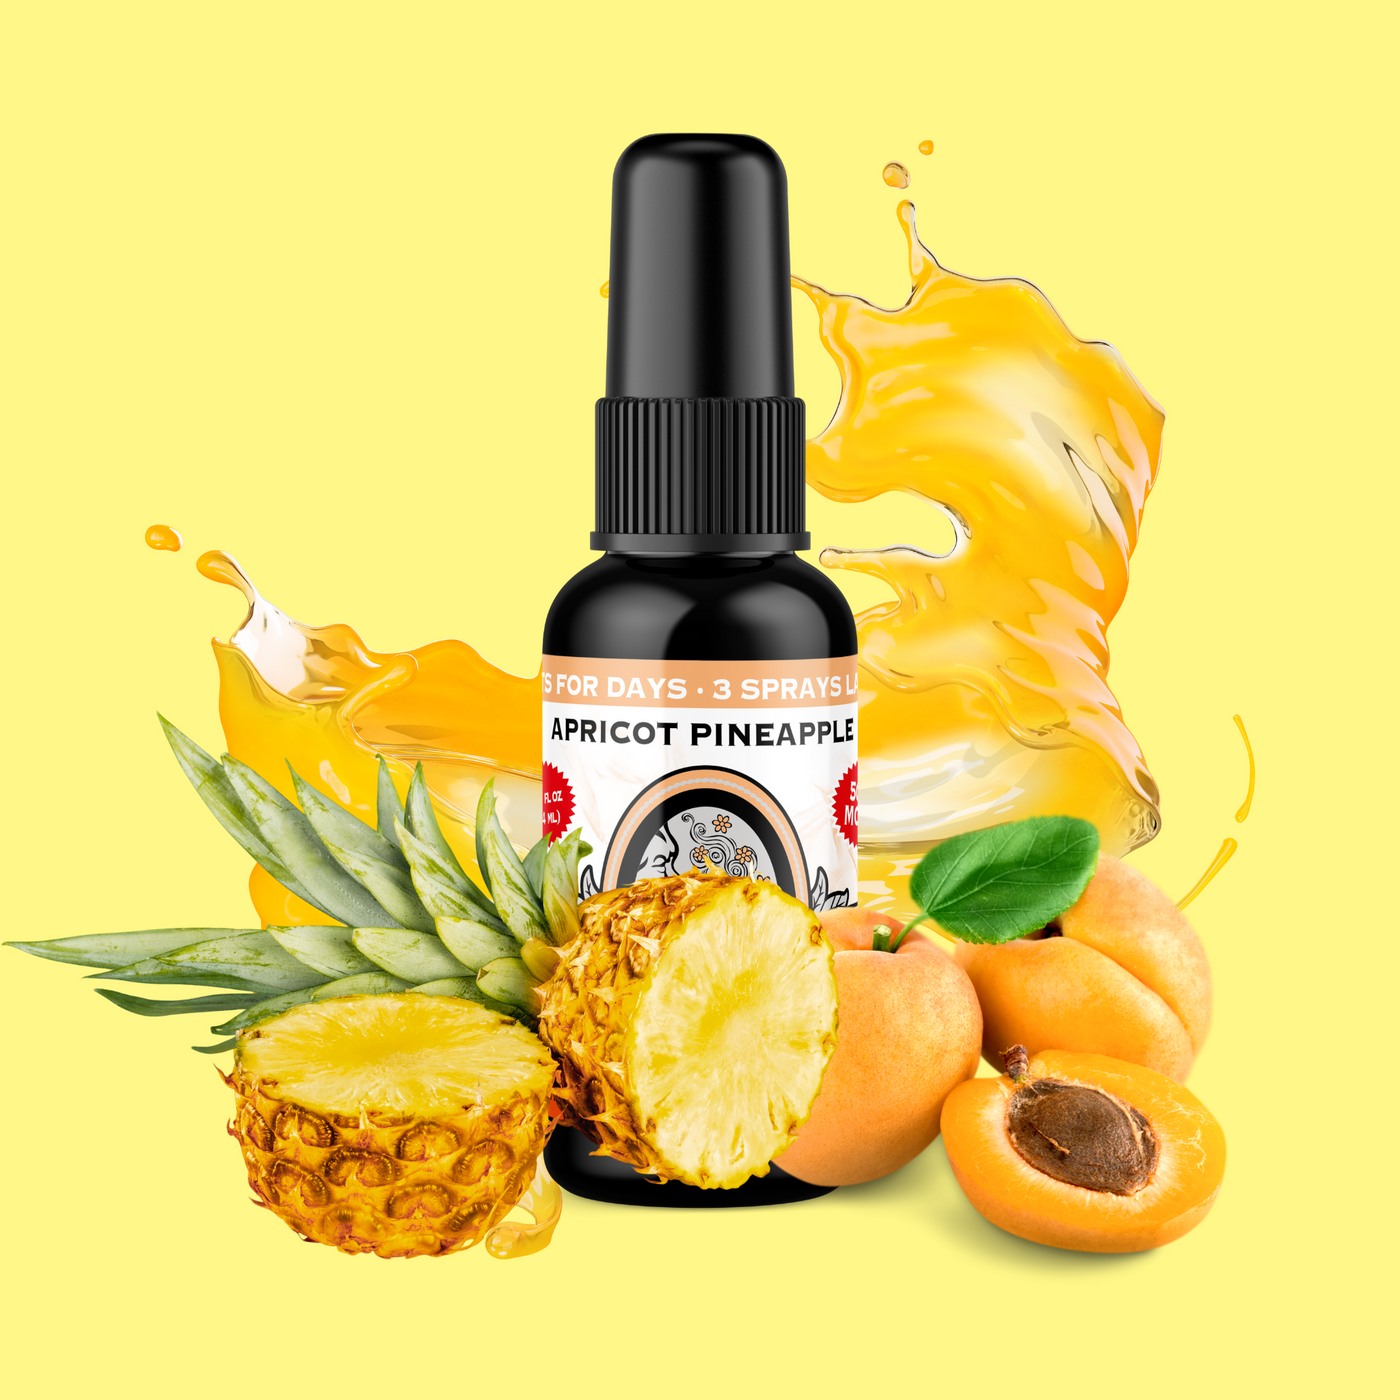 Apricot Pineapple Air Freshener Spray